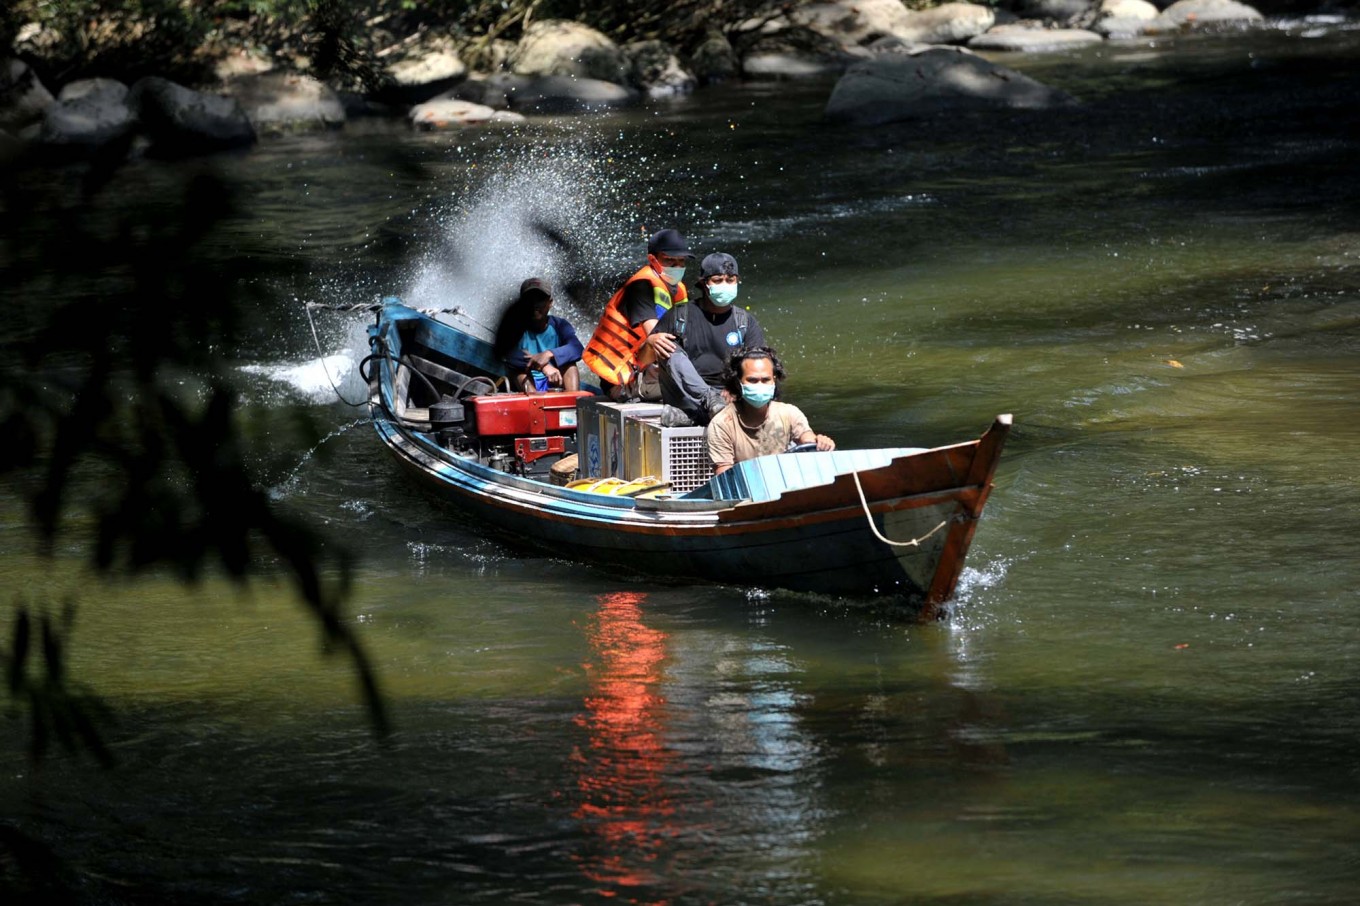 Melalui jalur darat atau air: Tim IAR mengangkut orangutan dengan perahu di Sungai Mentawai untuk masuk ke hutan yang dalam, di mana mereka akan dibebaskan | Foto: Dasril Roszandi / Jakarta Post